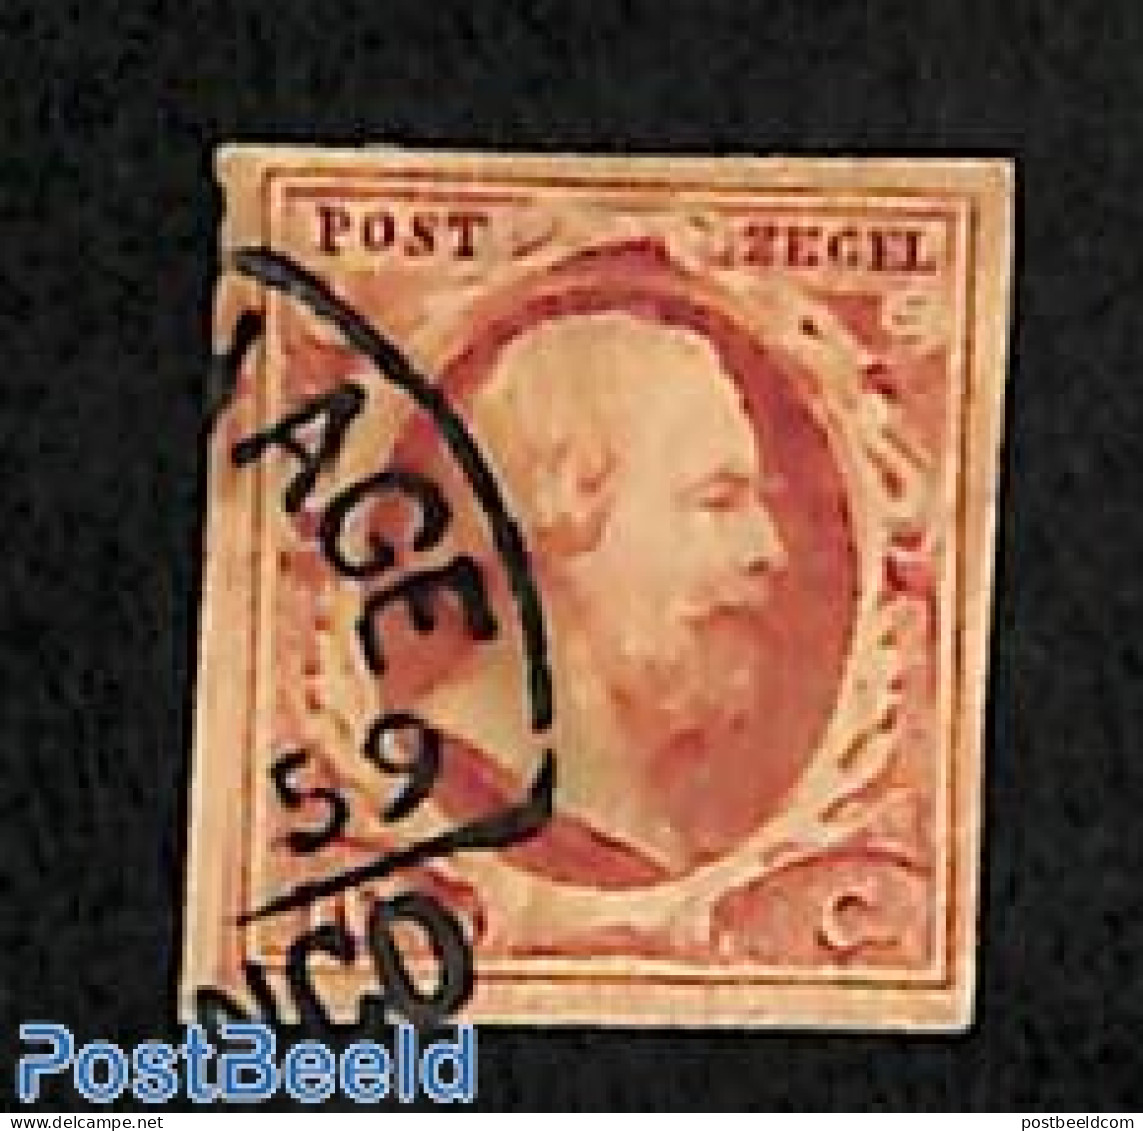 Netherlands 1852 10, Plate V, Used, Used Or CTO - Gebruikt